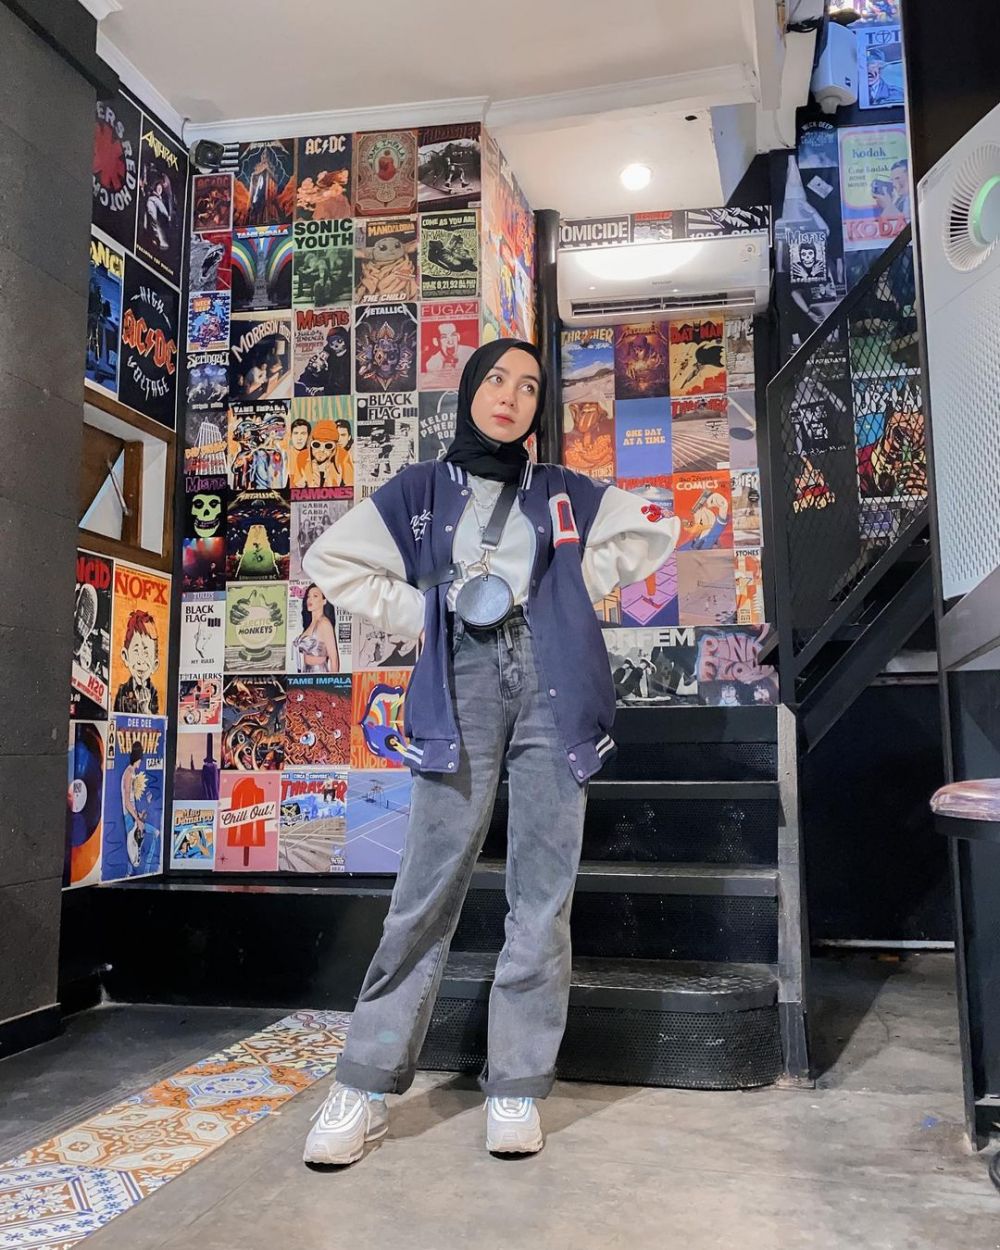 10 Outfit Hijab dengan Celana Jeans ala Syahla Effendi, Anti Gagal!